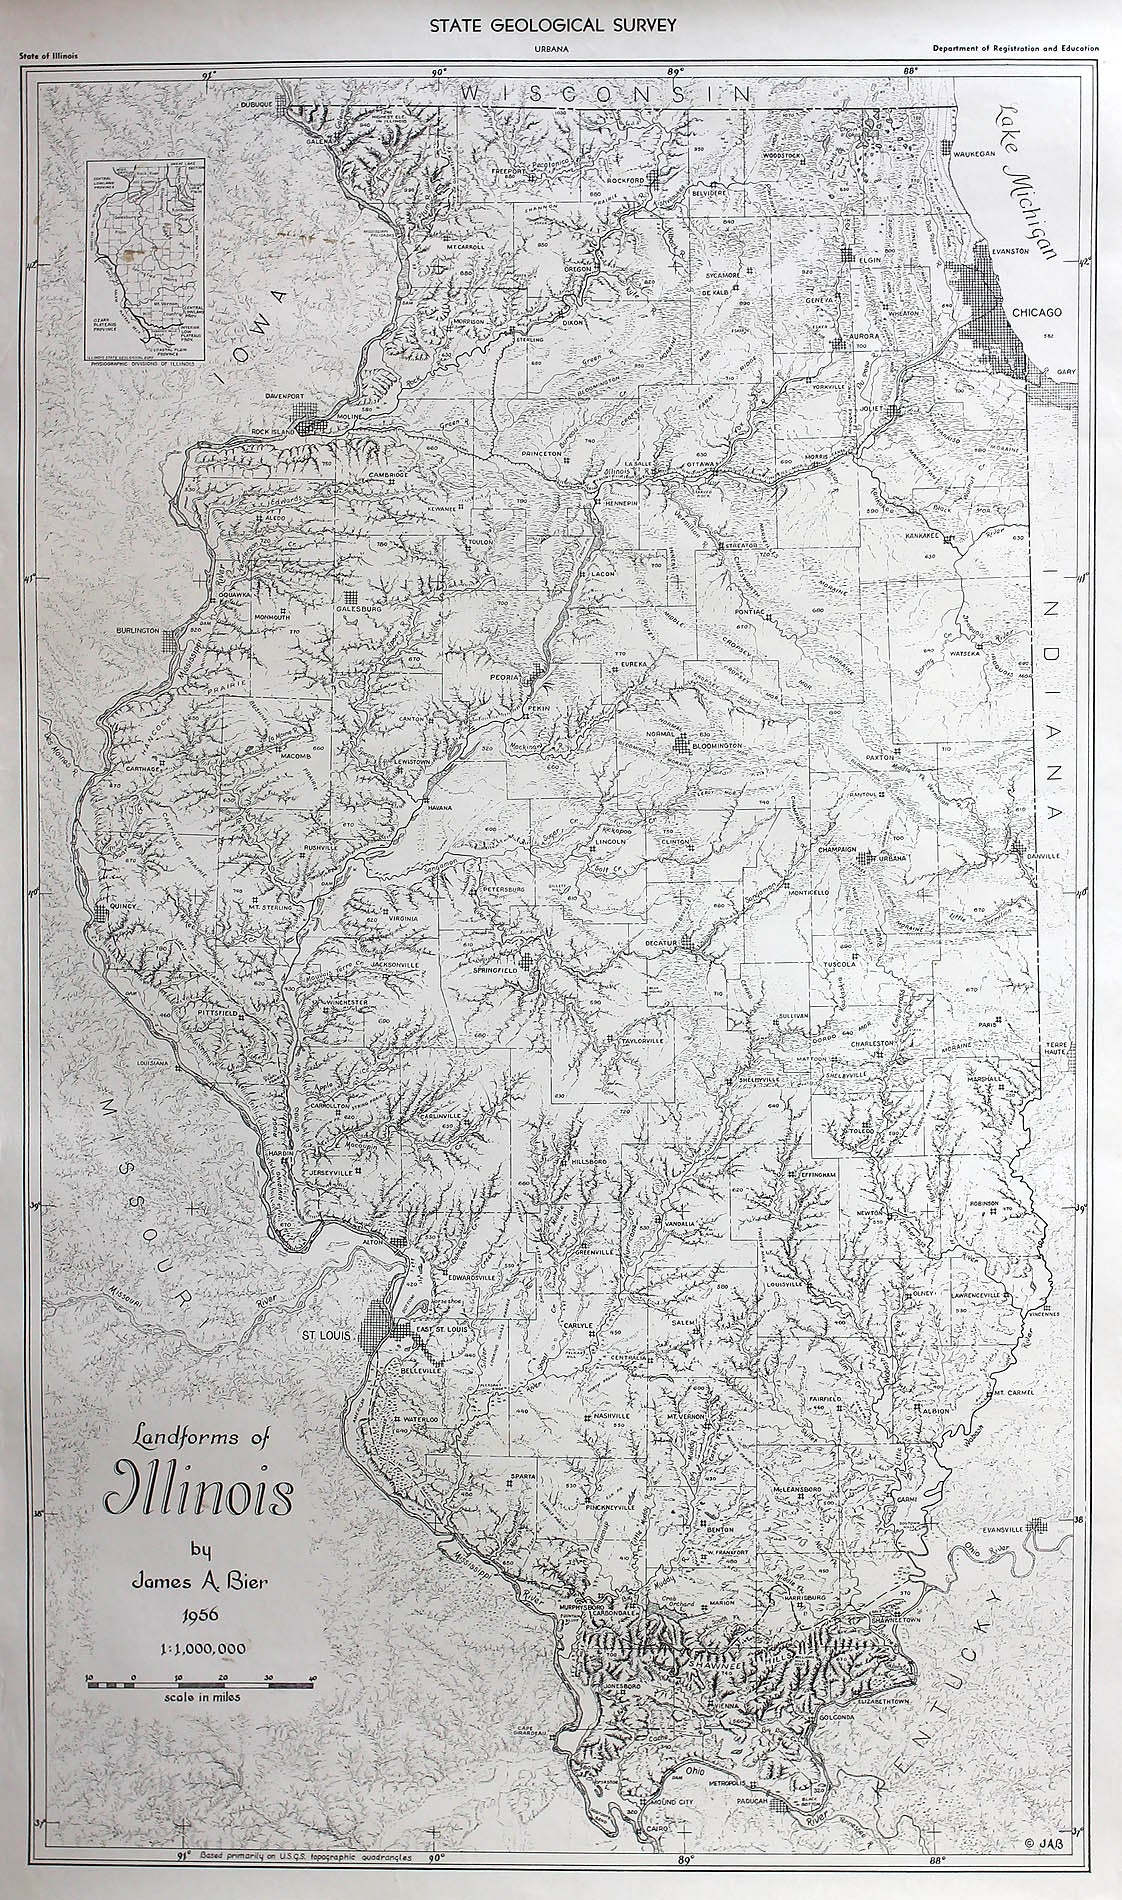 (Il.) Landforms of Ilinnois